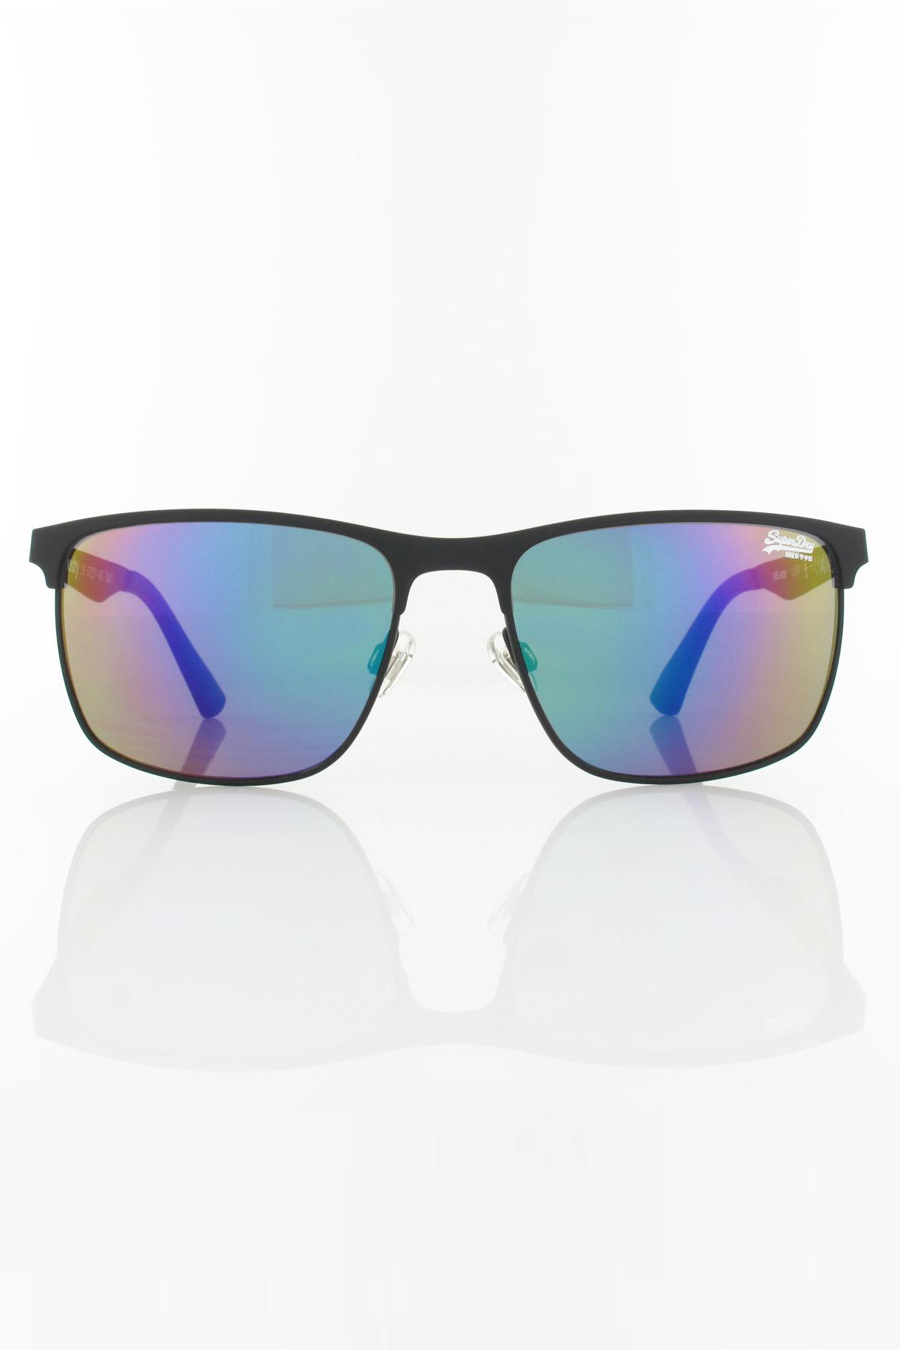 Sunglasses SUPERDRY SDS-ACE-004